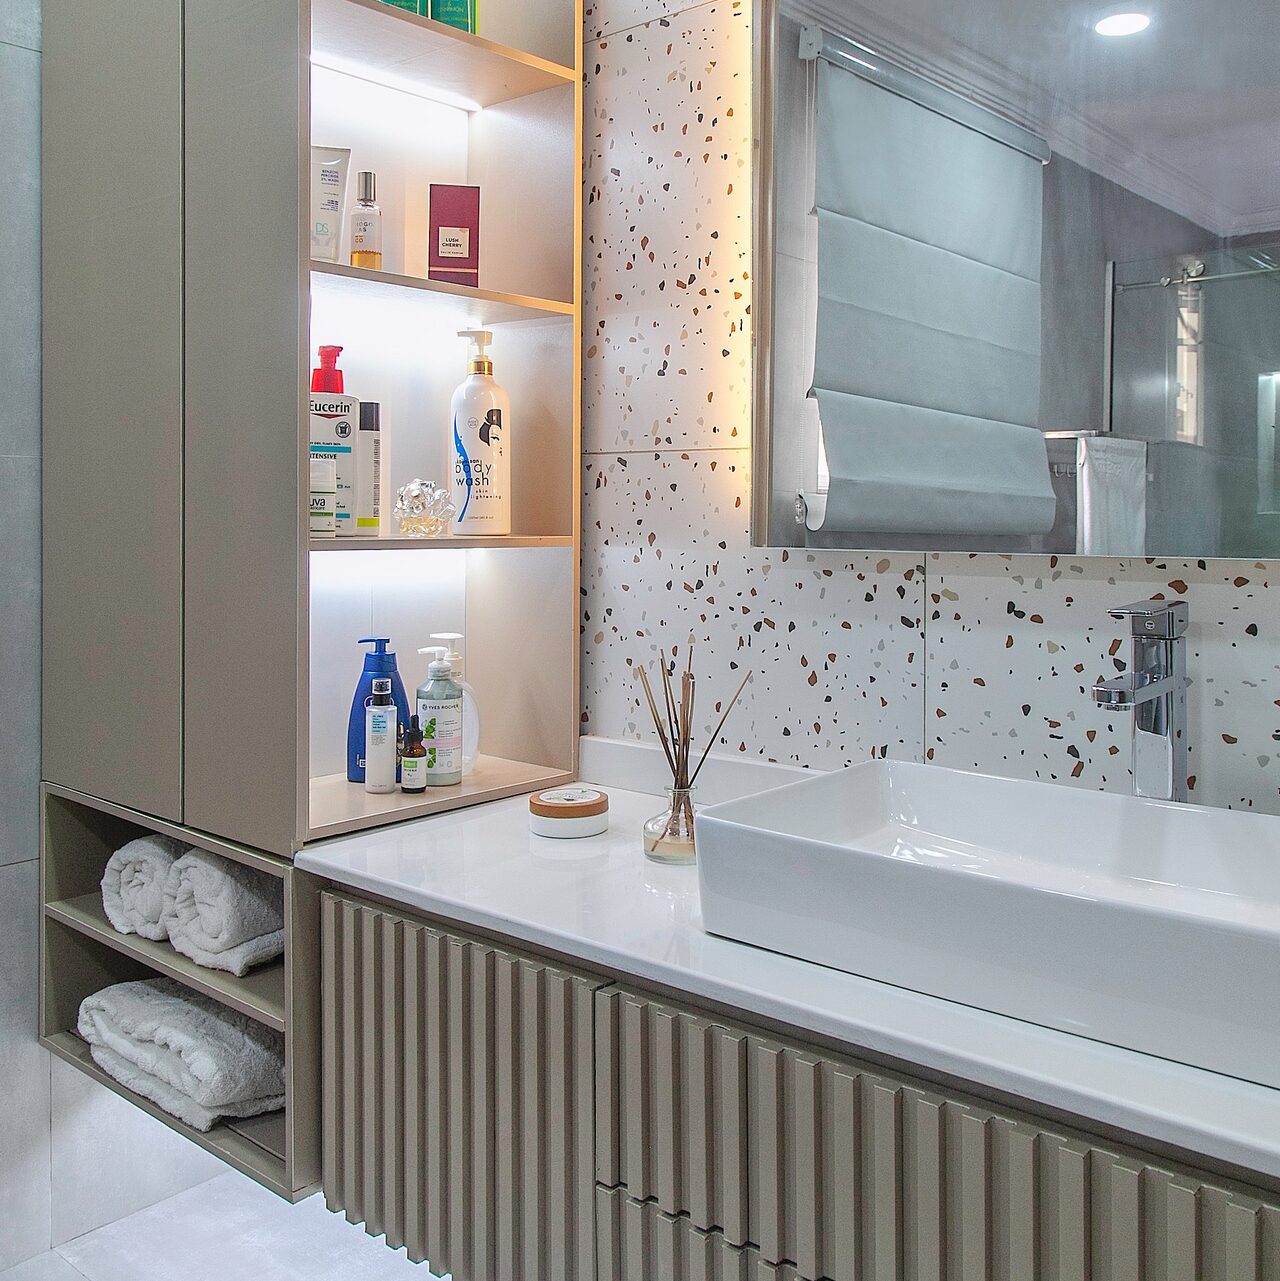 Vanity Area in this modern bathroom renovation by 2107 Atelier